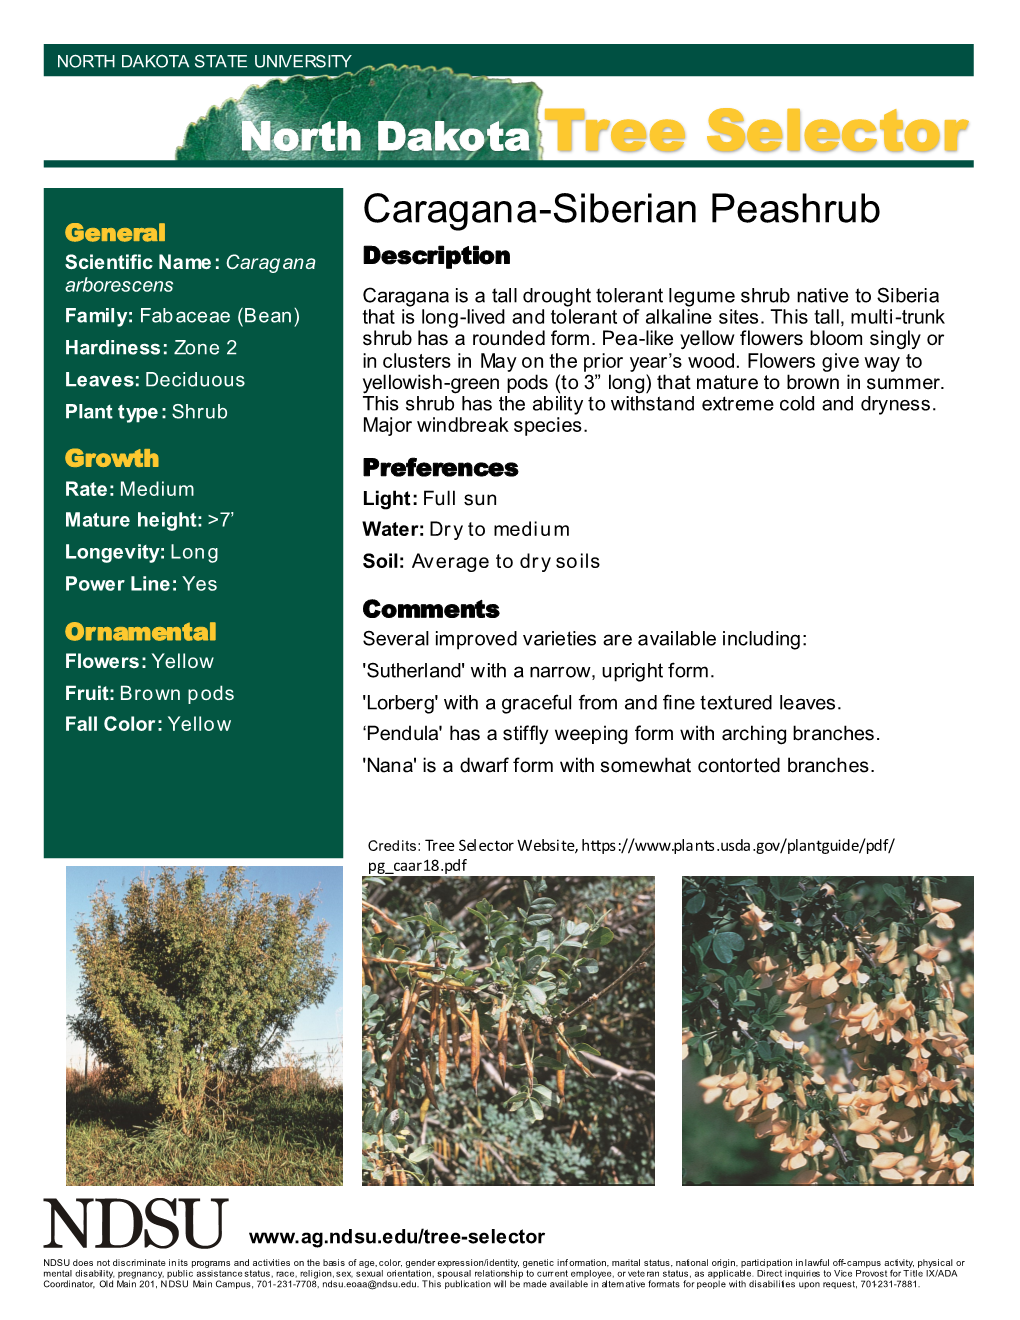 North Dakota Tree Selector Caragana-Siberian Peashrub